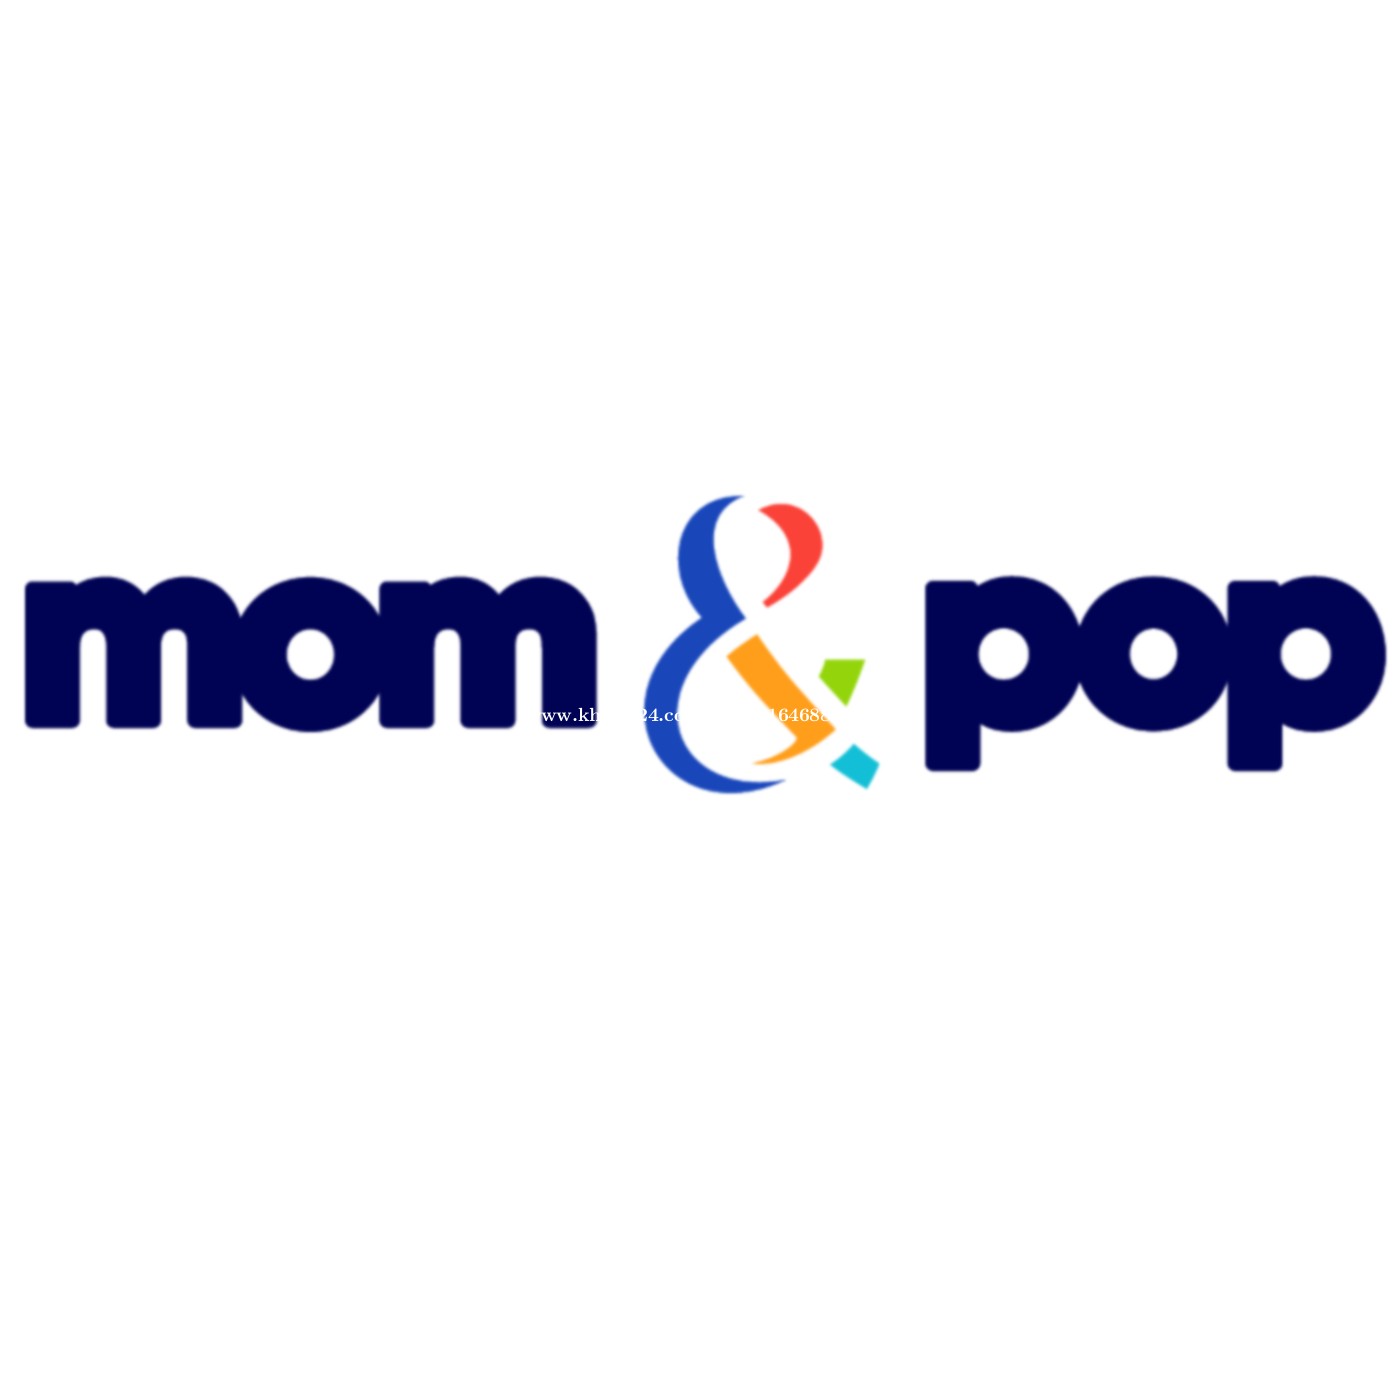 mom&pop